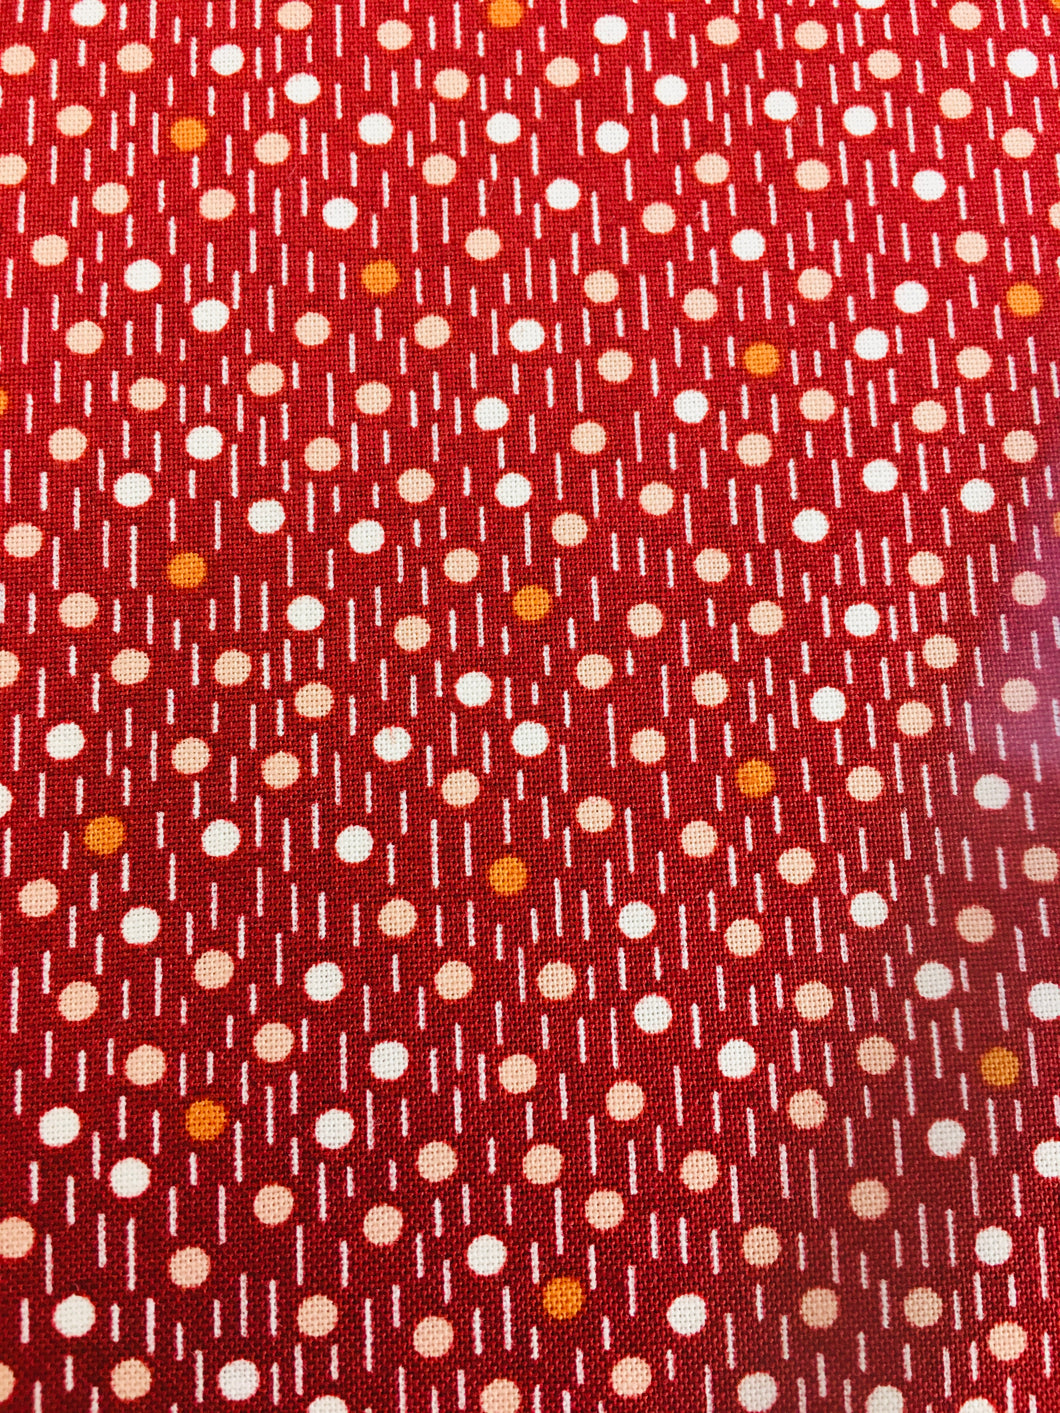 EQP New Vintage /Cranberry Red April Showers